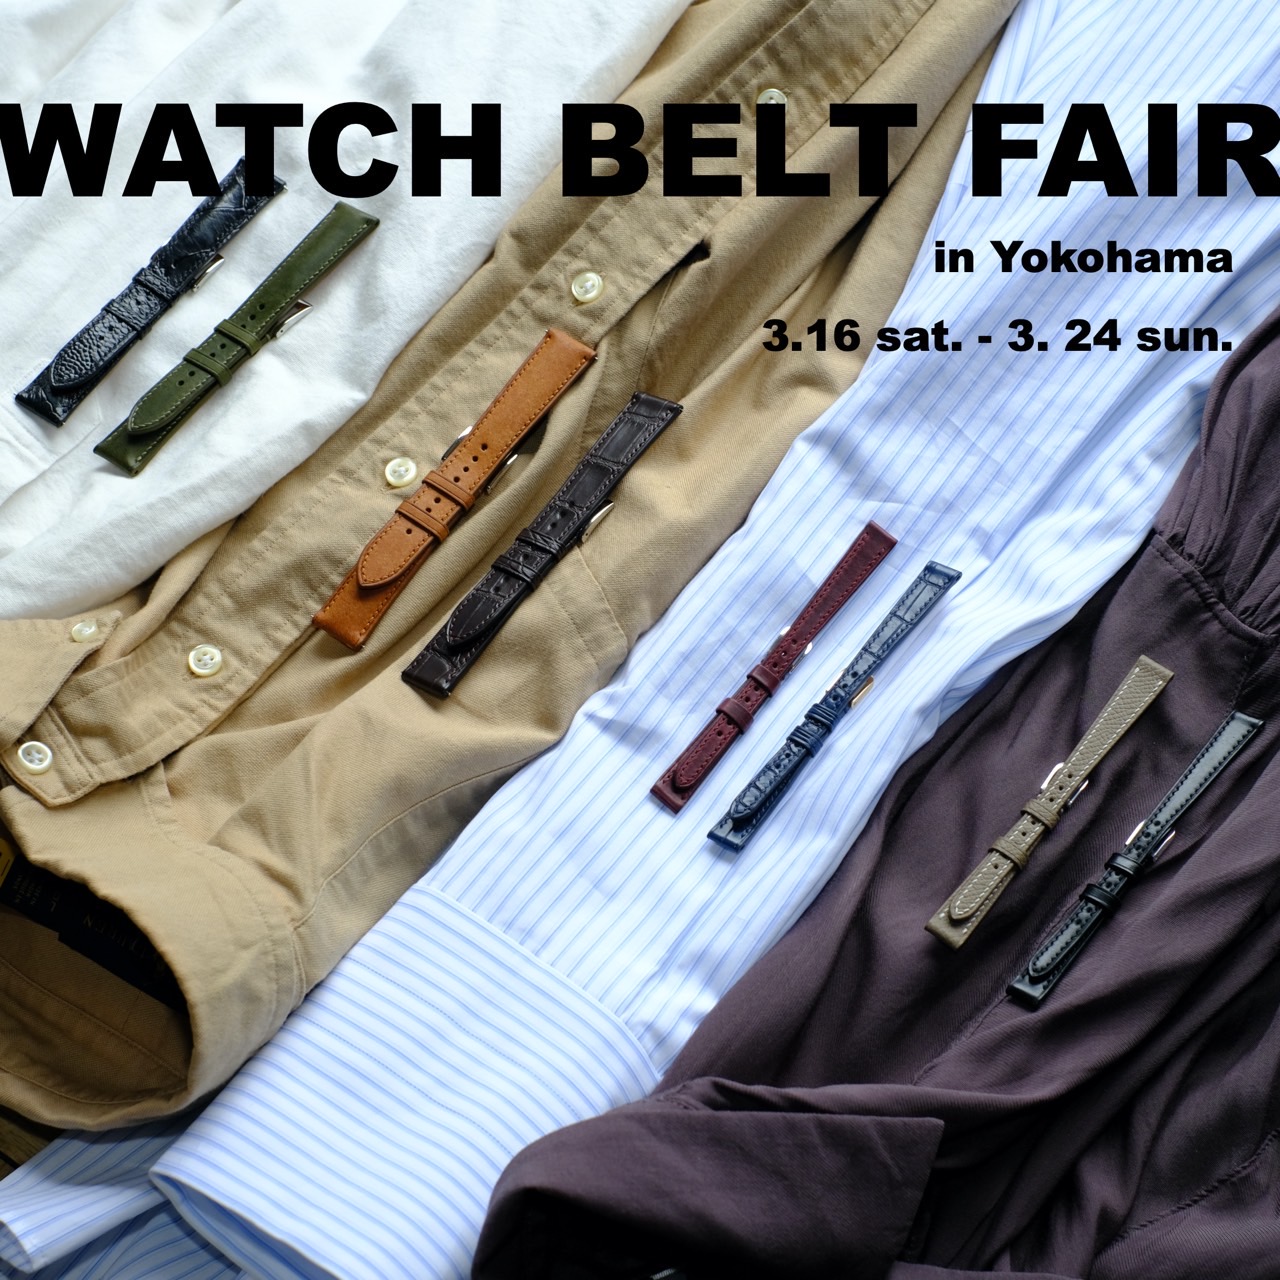 Watch Belt Fair in Yokohama